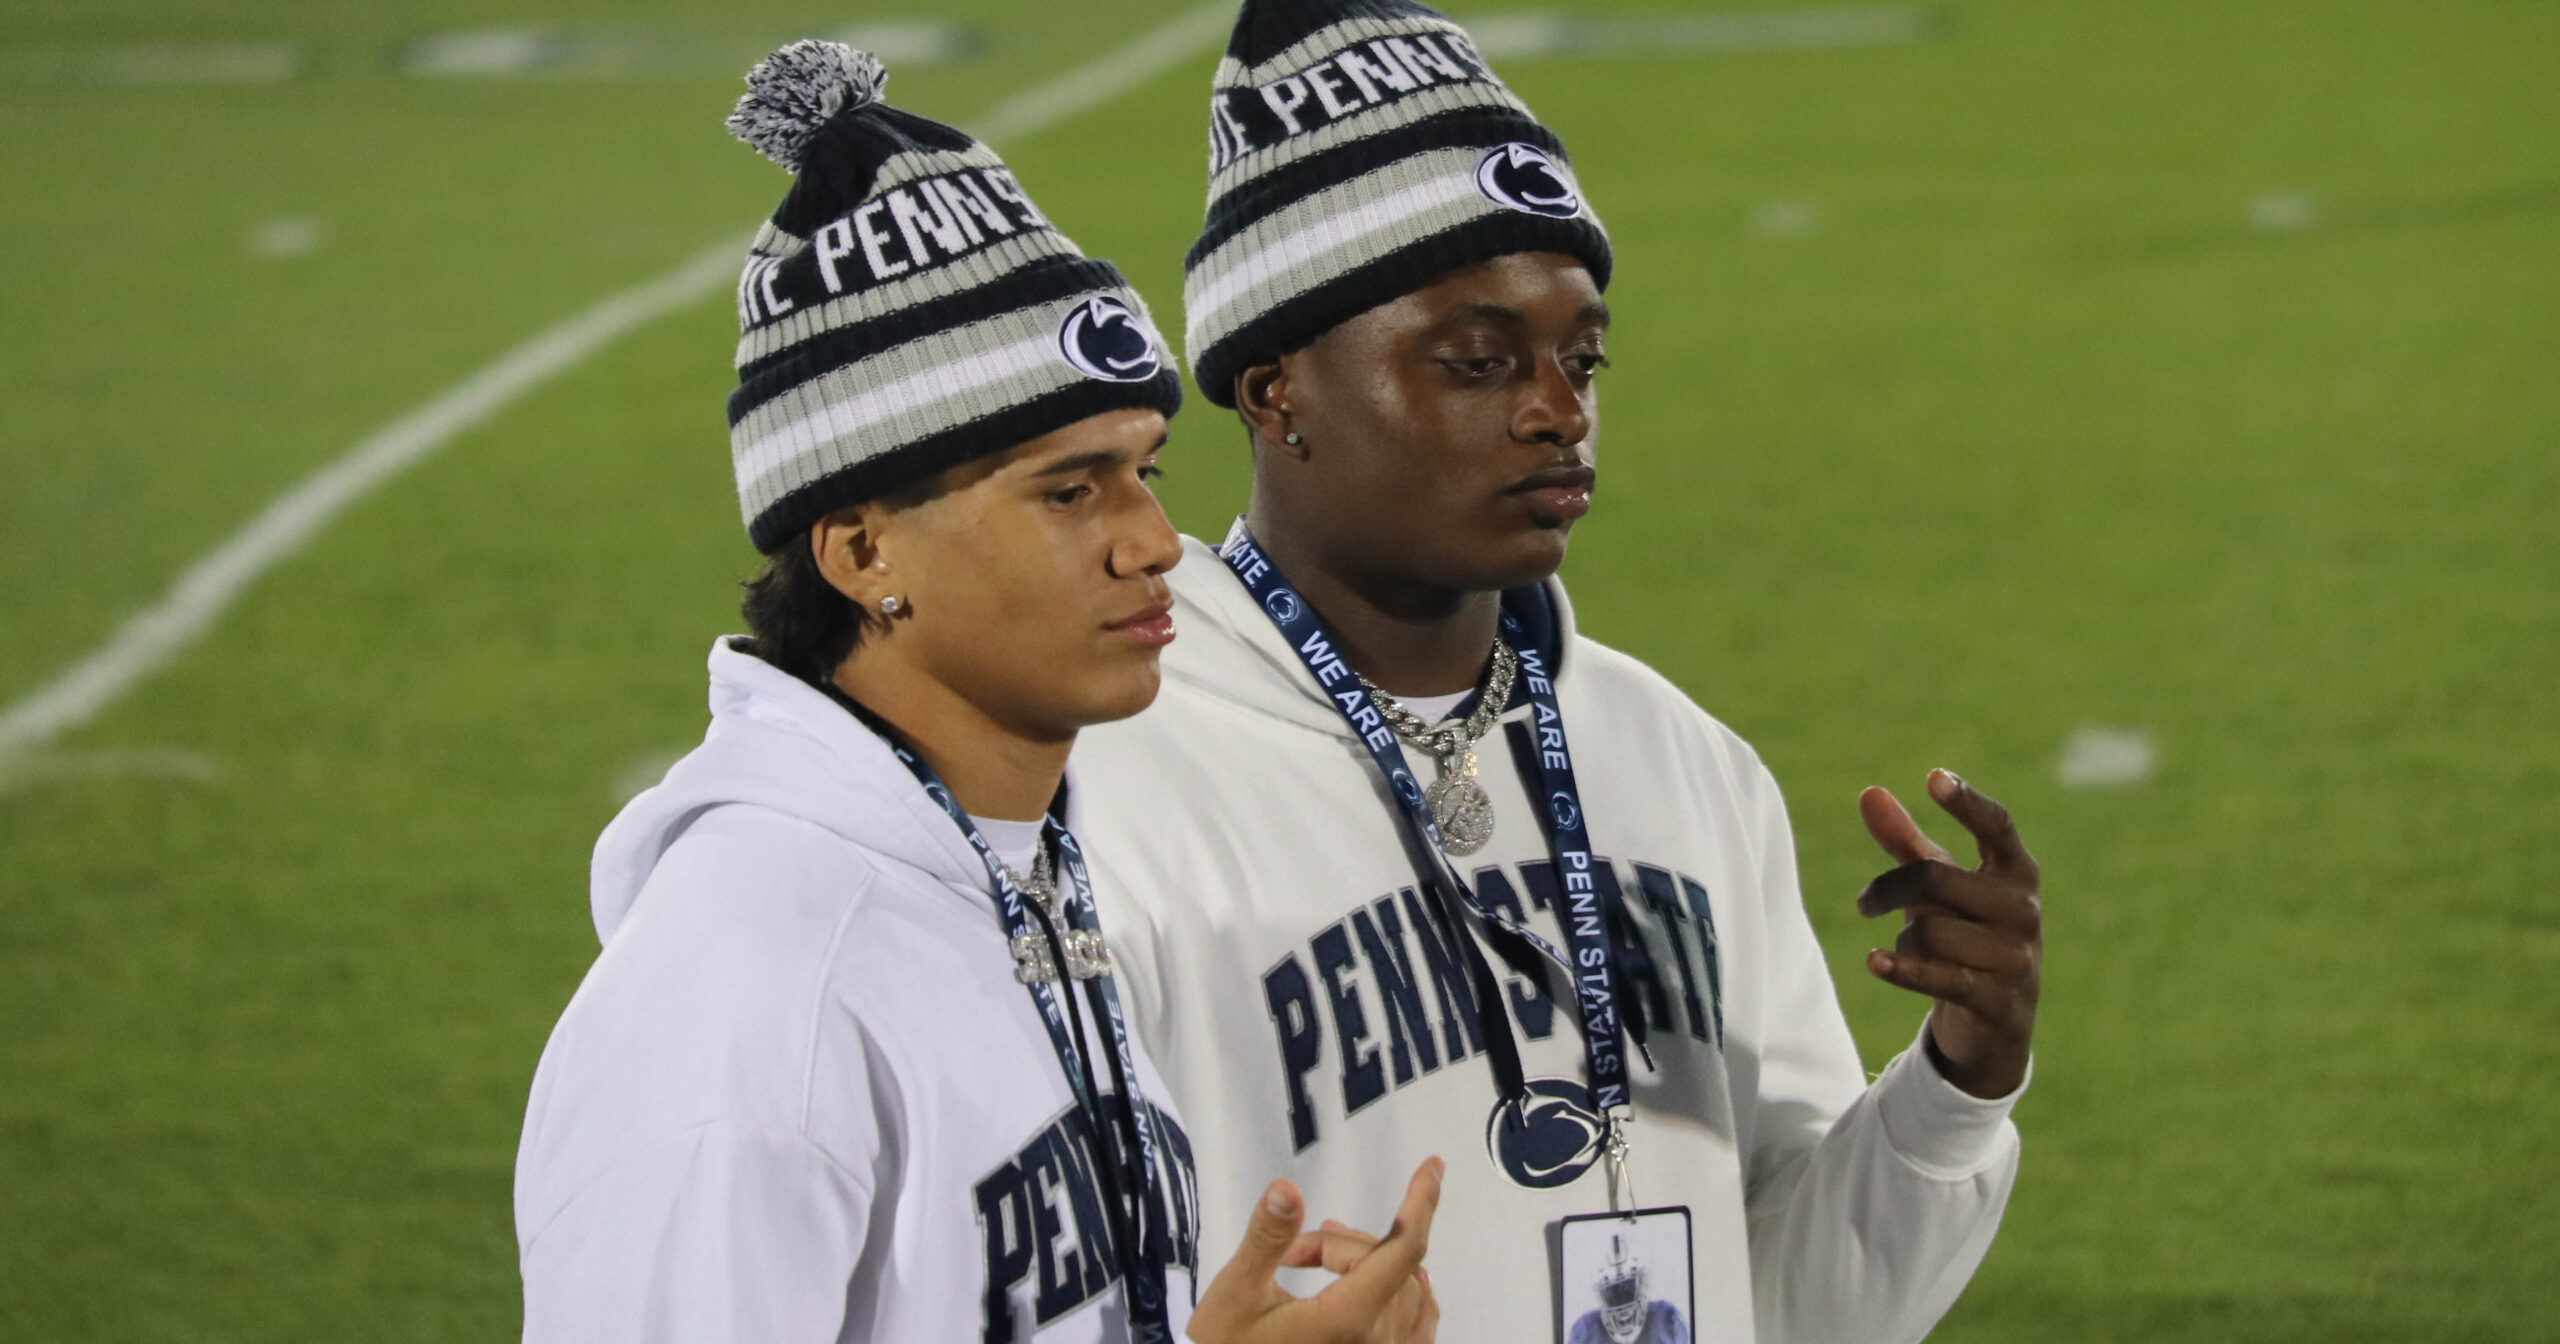 Penn State linebackers Ta'Mere Robinson and Tony Rojas